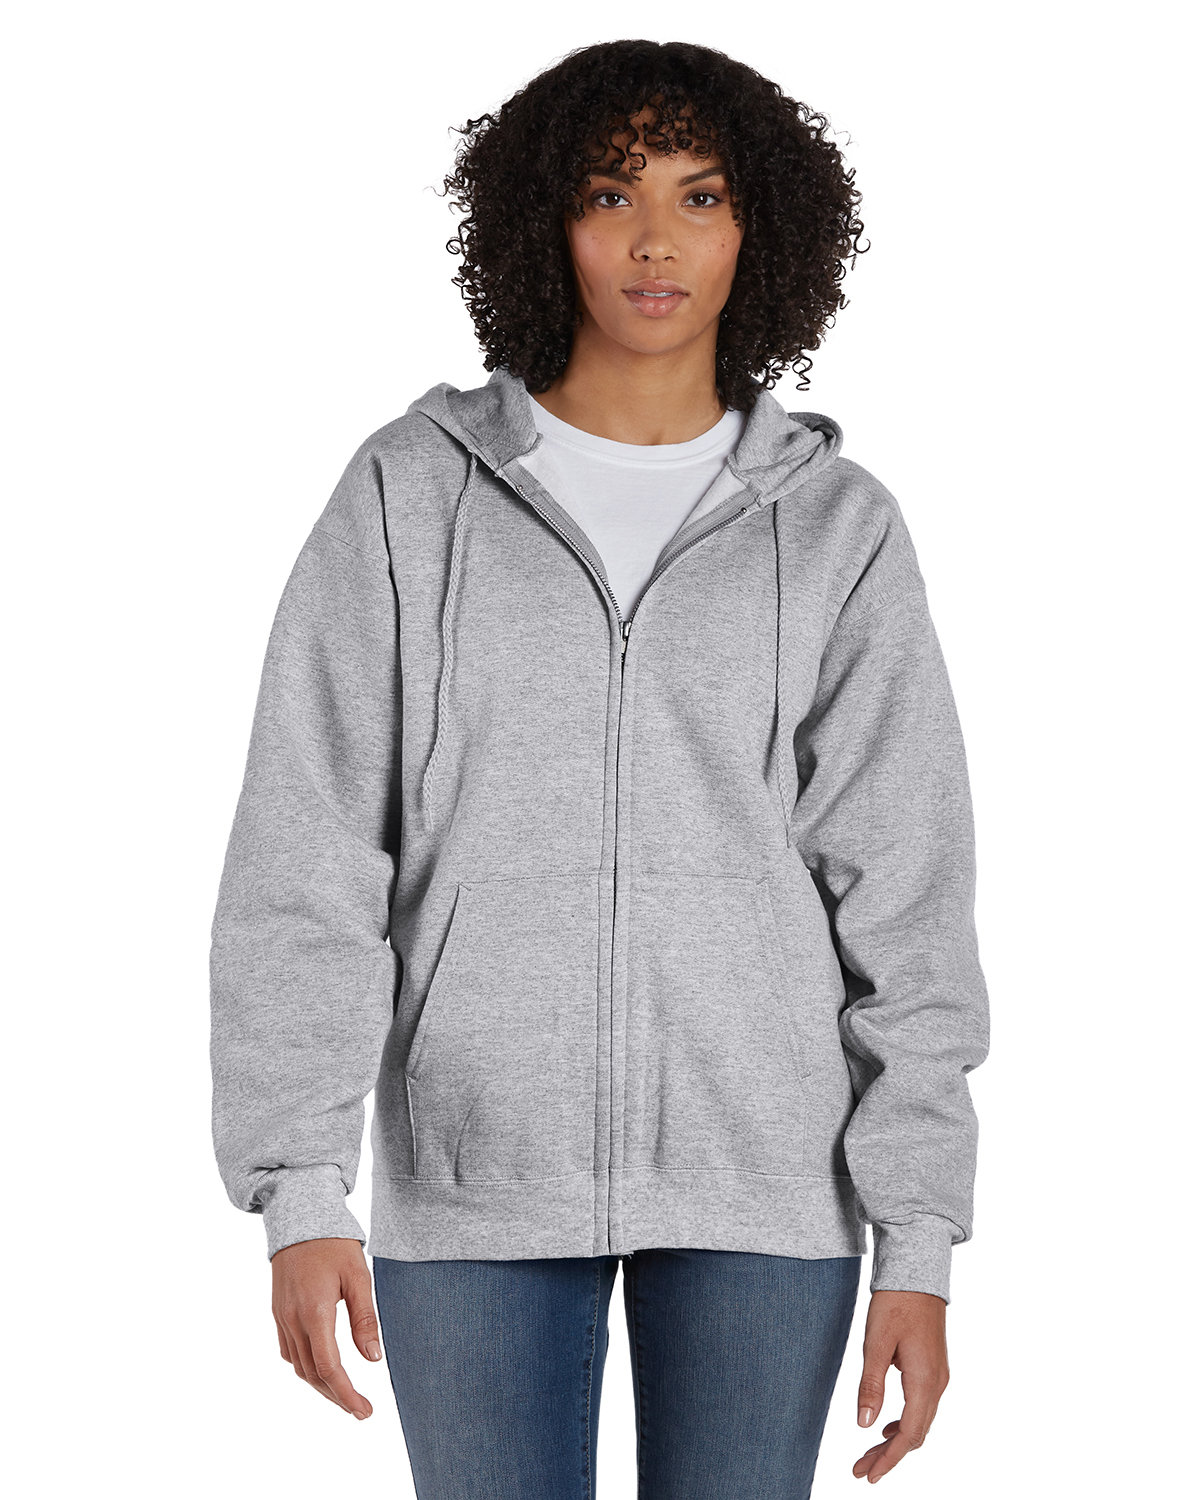 Hanes Adult Ultimate Cotton® 9010 Full Zip Hooded Sweatshirt Alphabroder